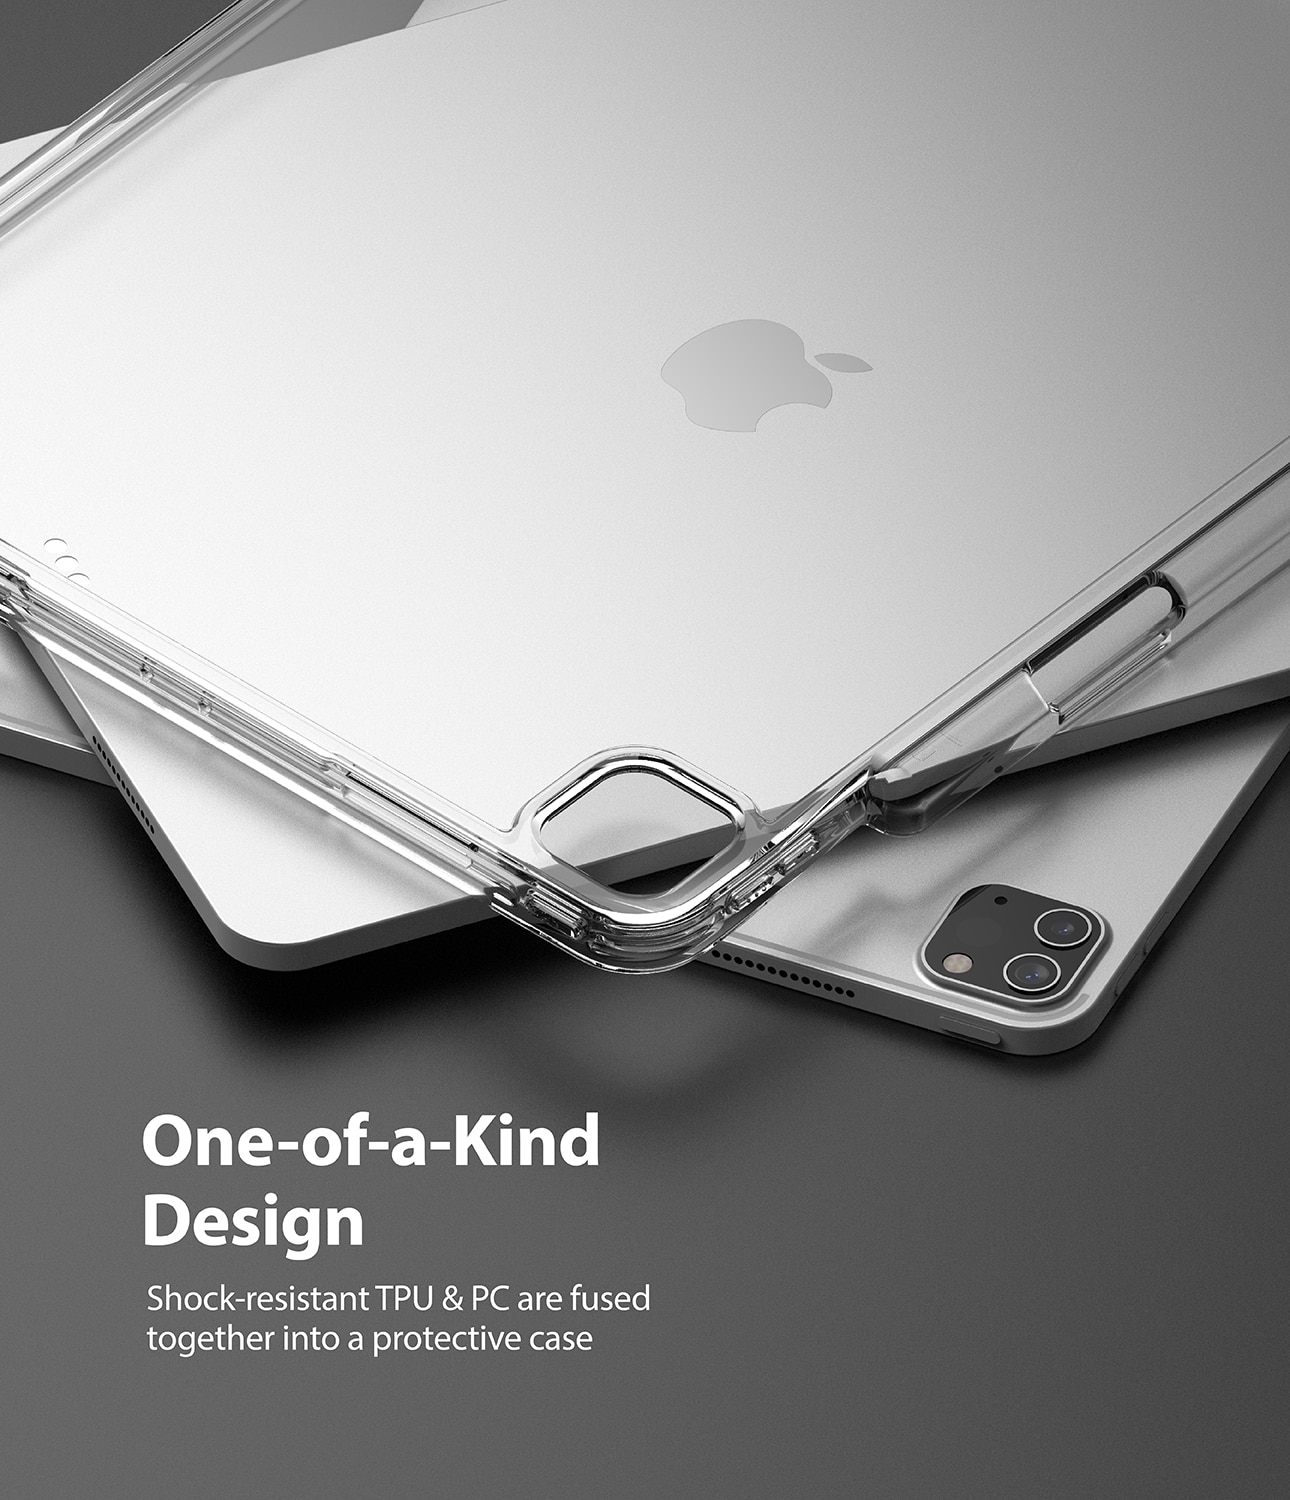 Cover Fusion Plus iPad Pro 12.9 6th Gen (2022) Clear